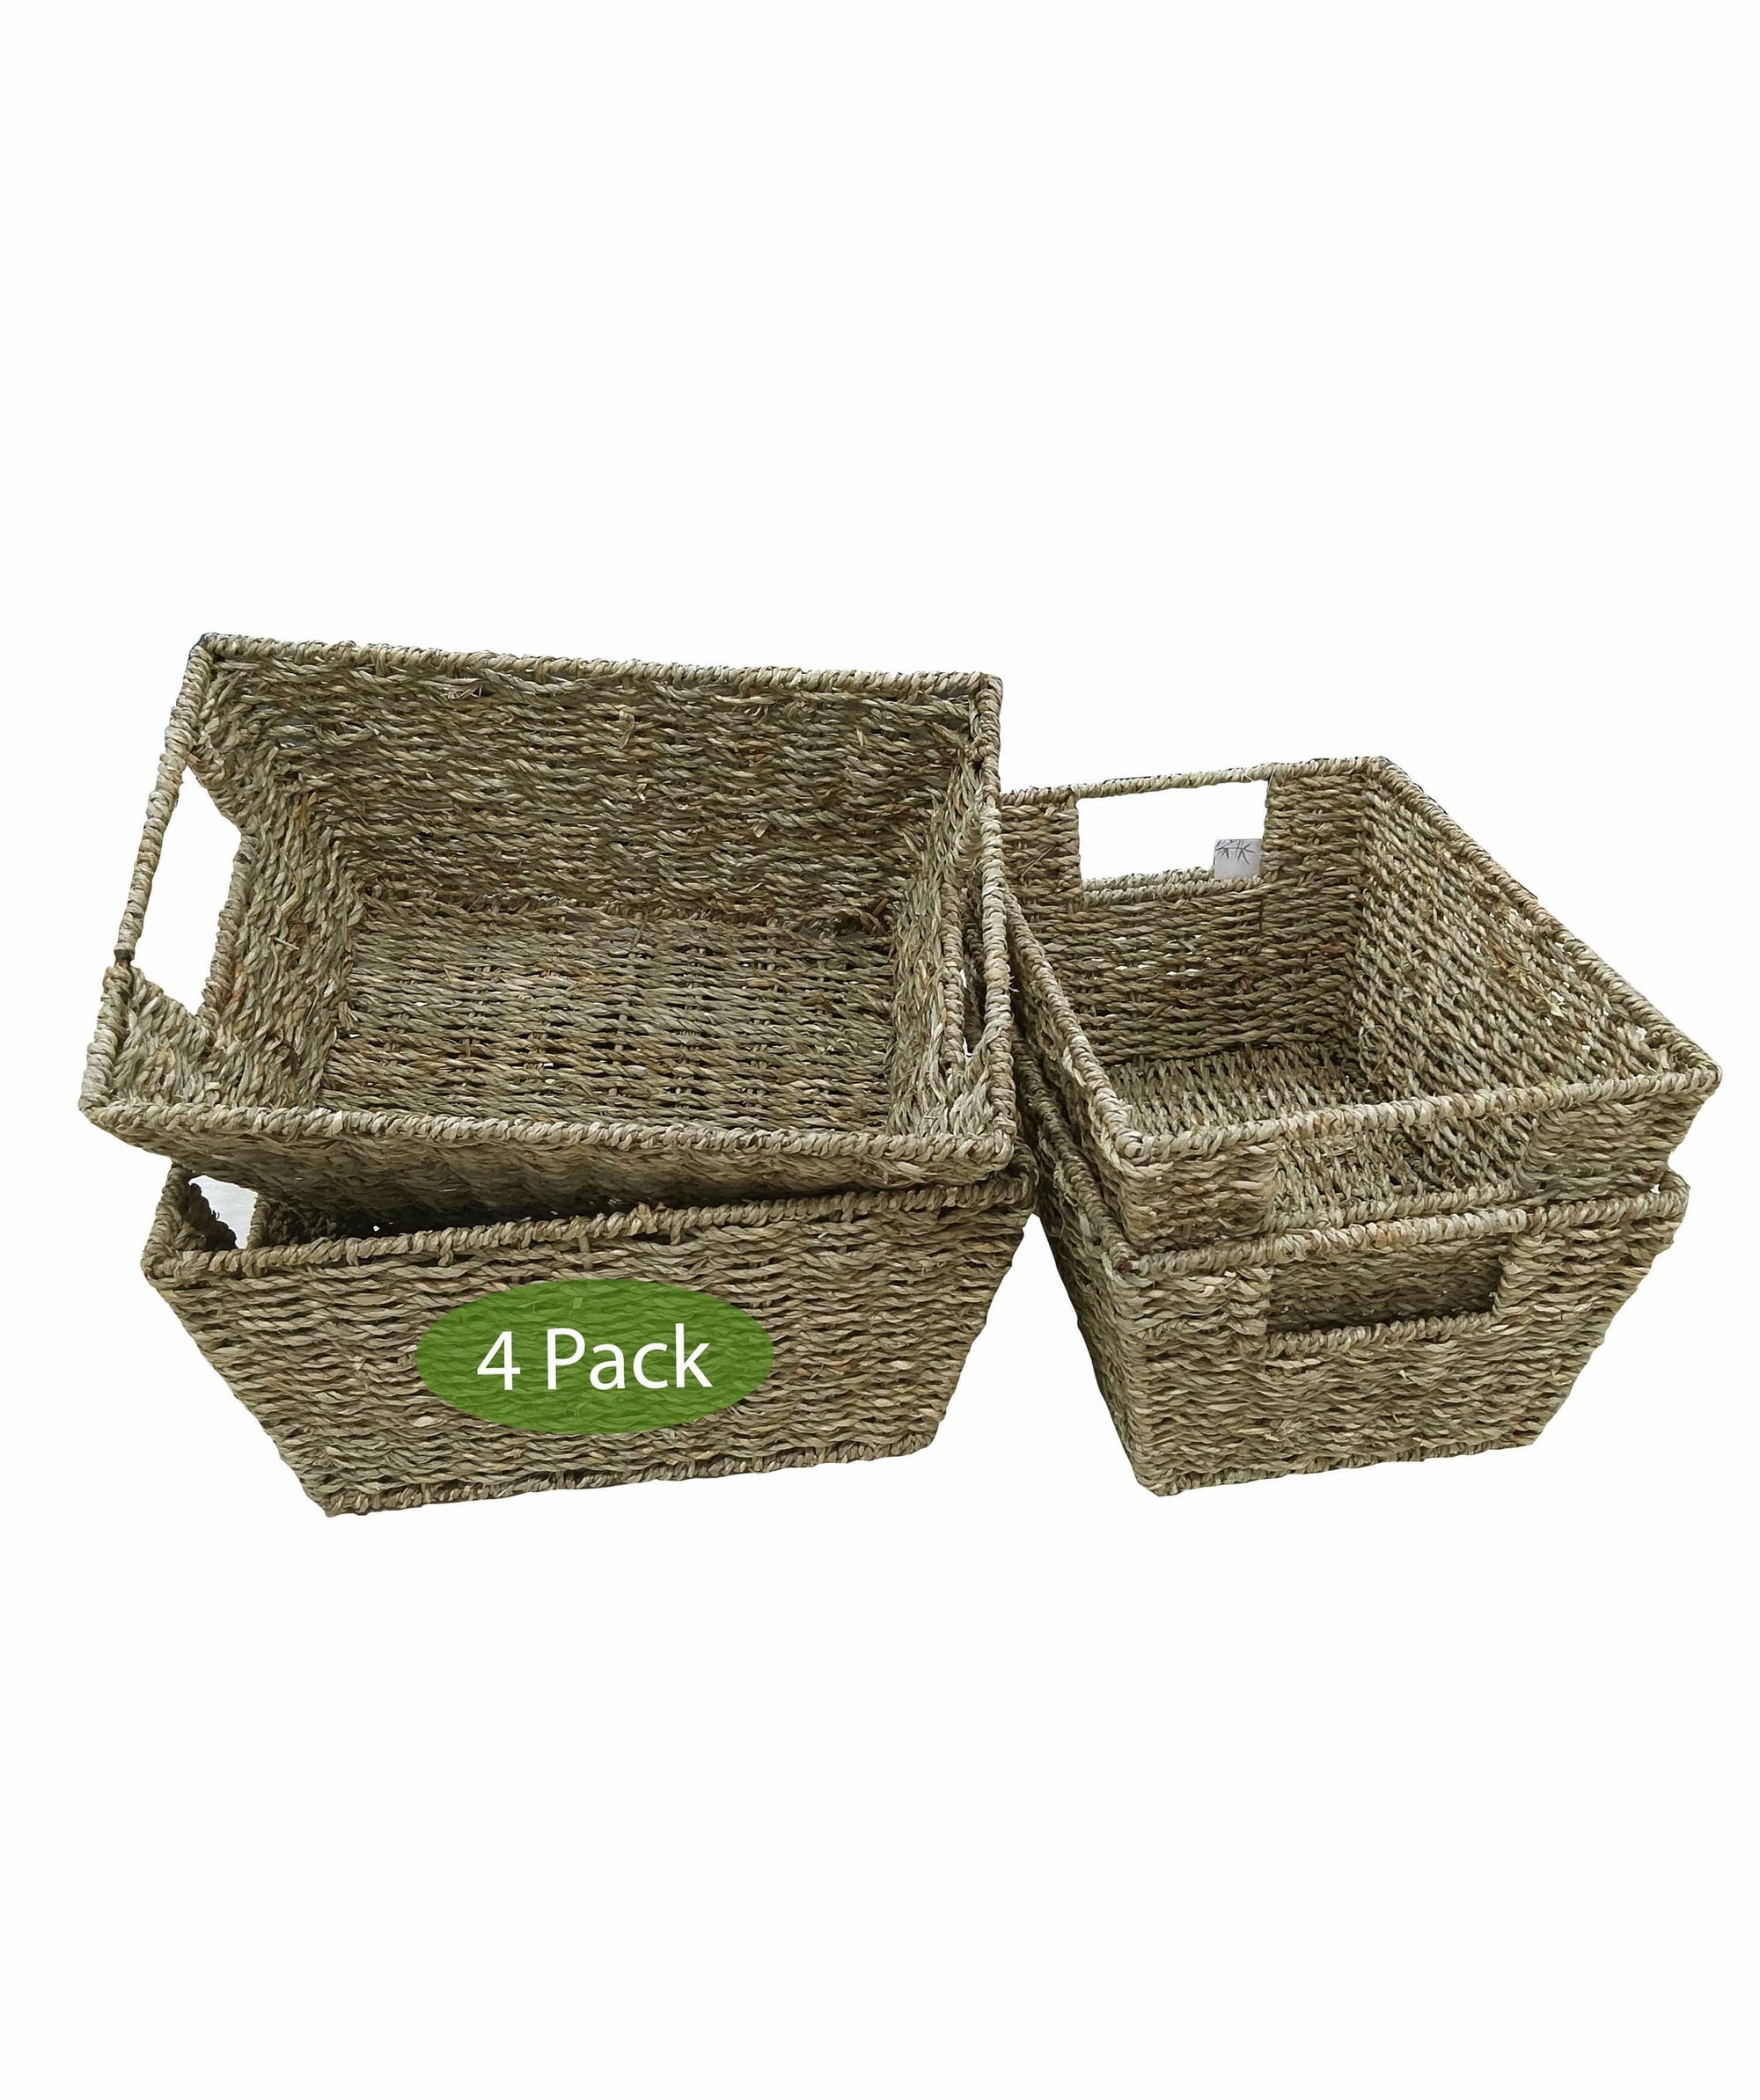 Wicker Trapezoid Storage Baskets - Set of 4